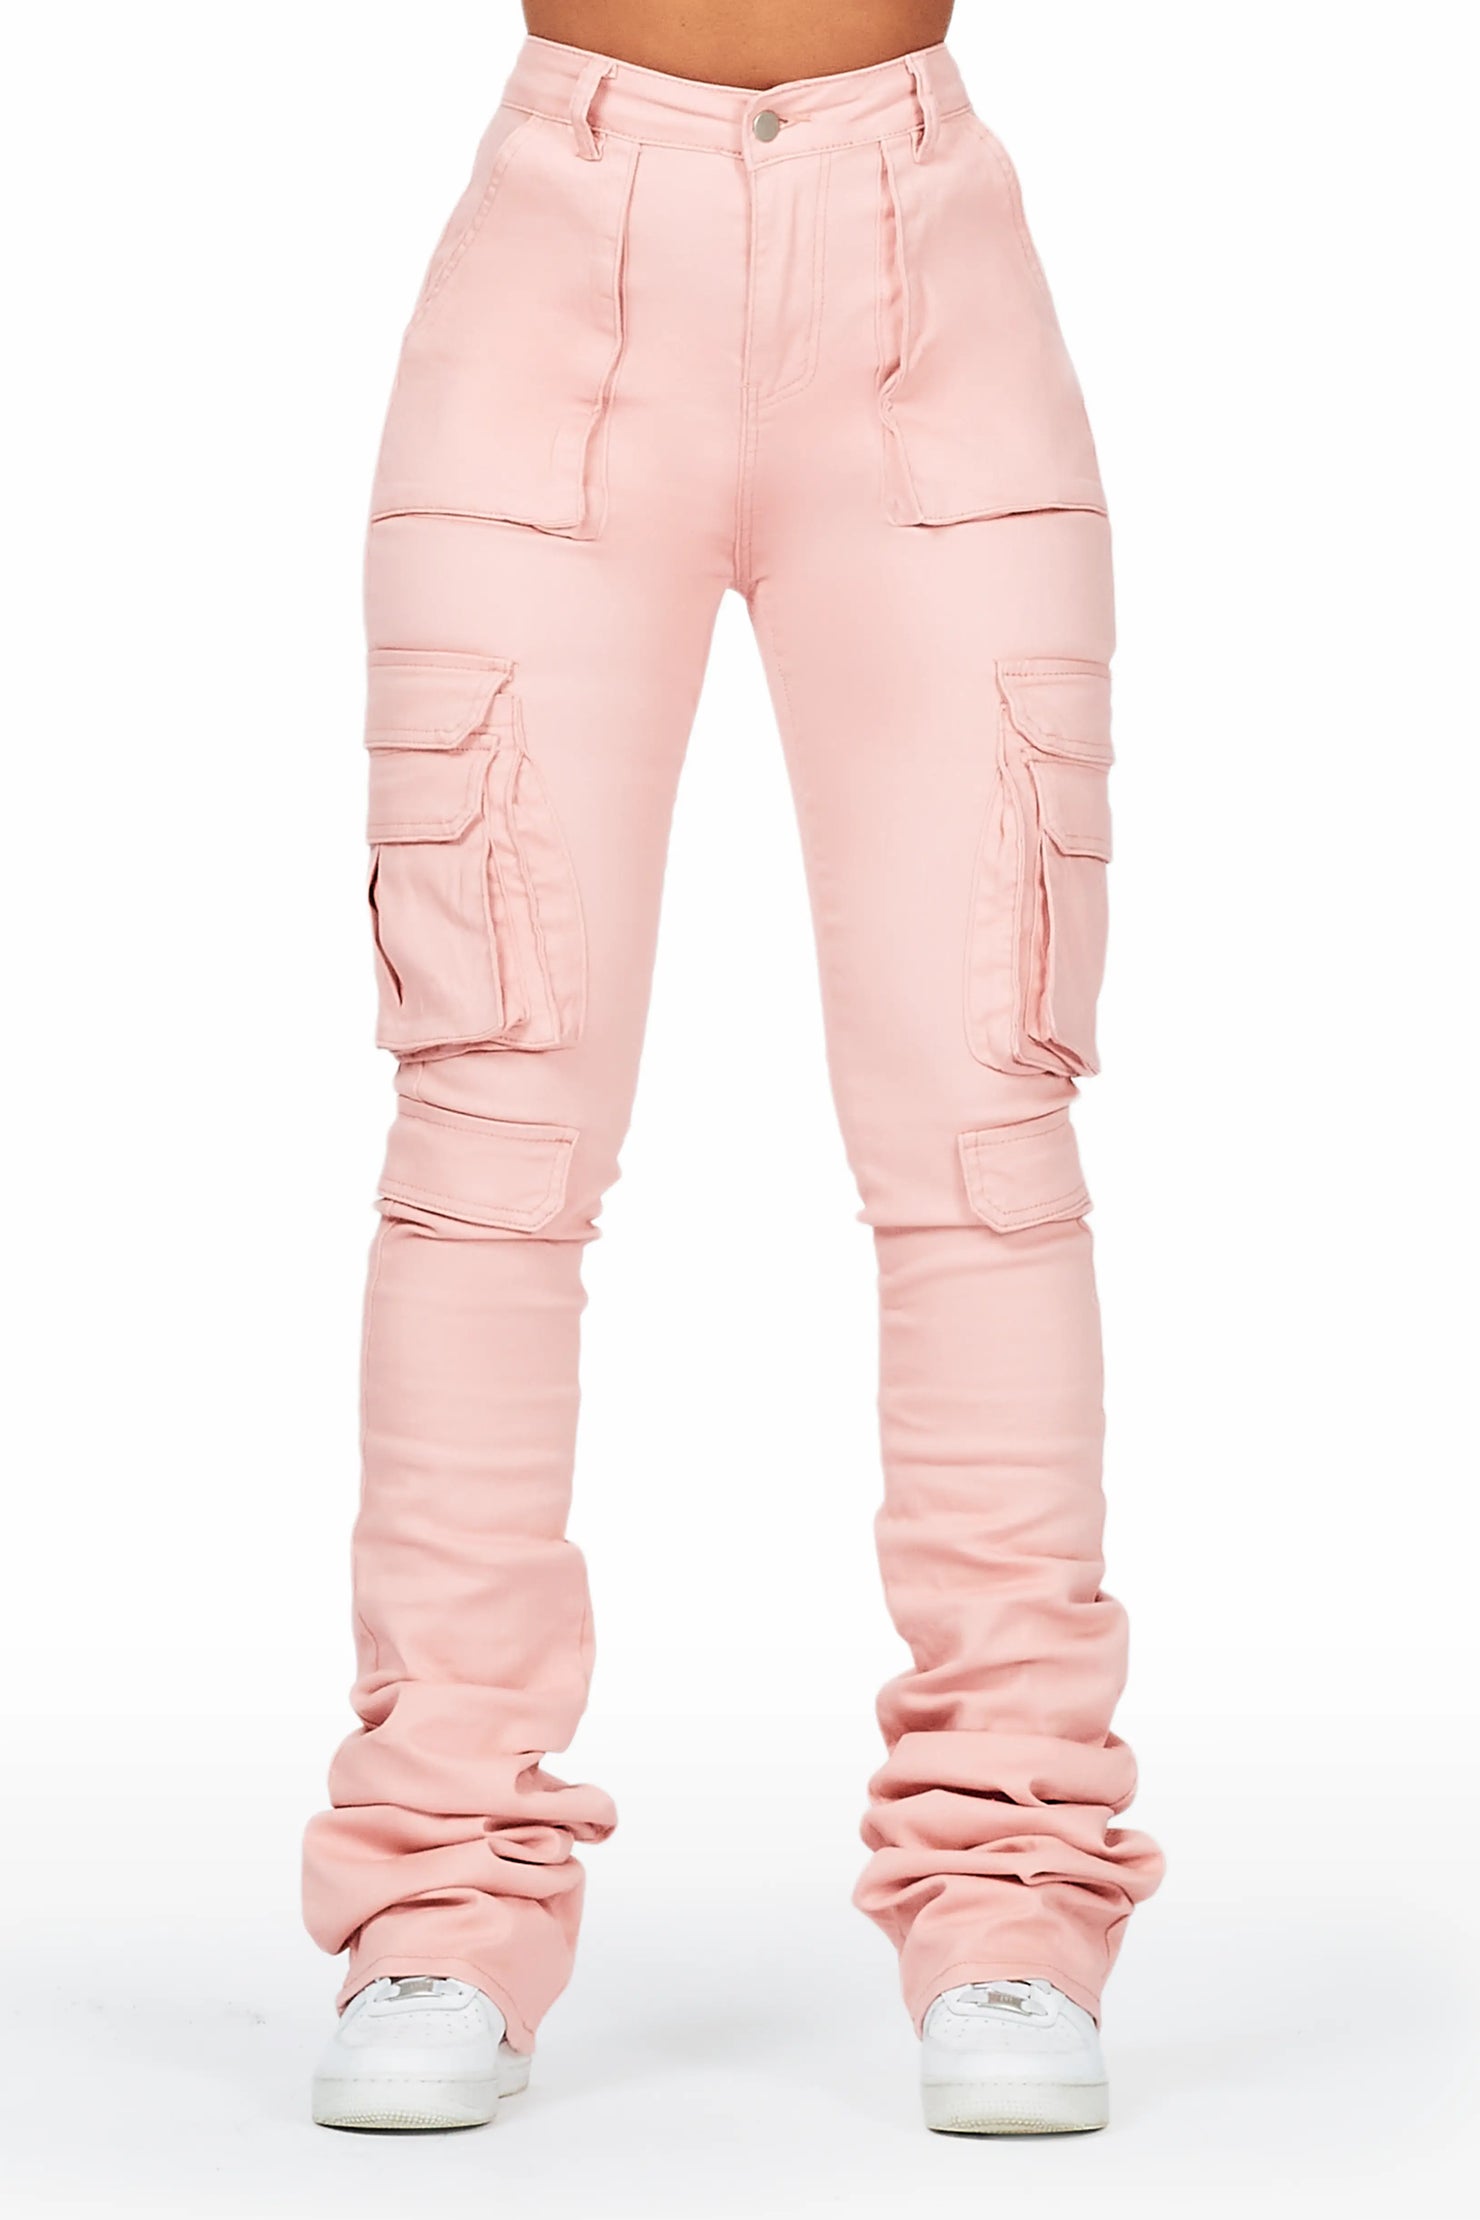 Amberita Pink Cargo Super Stacked Jean